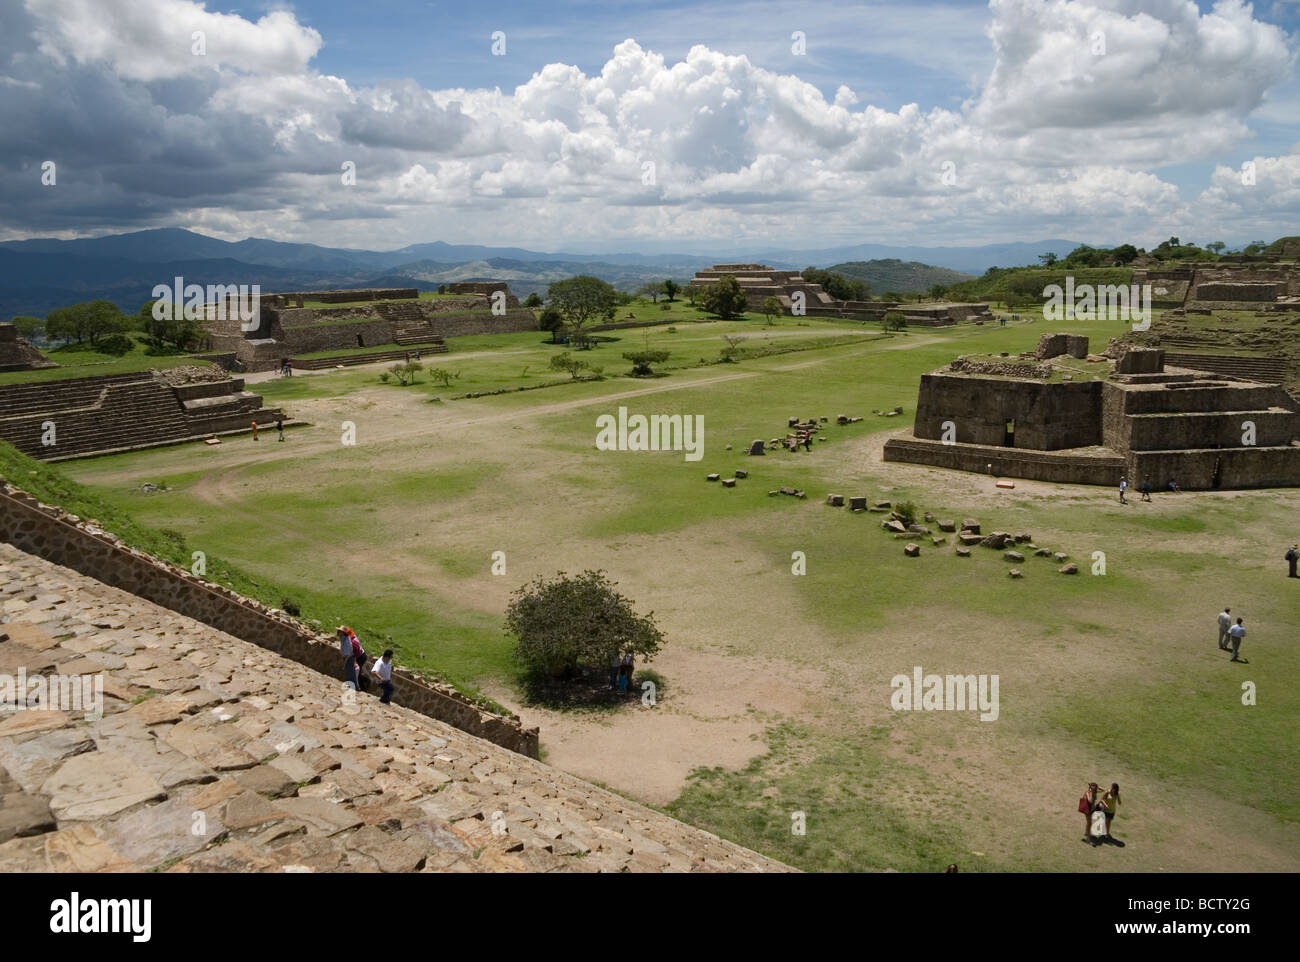 Monte Alban Ruin Site Oaxaca, Mexico, 500 BC-750 AD the oldest stone city in Mexico, Zapotec builders, stone pyramidal platforms Stock Photo